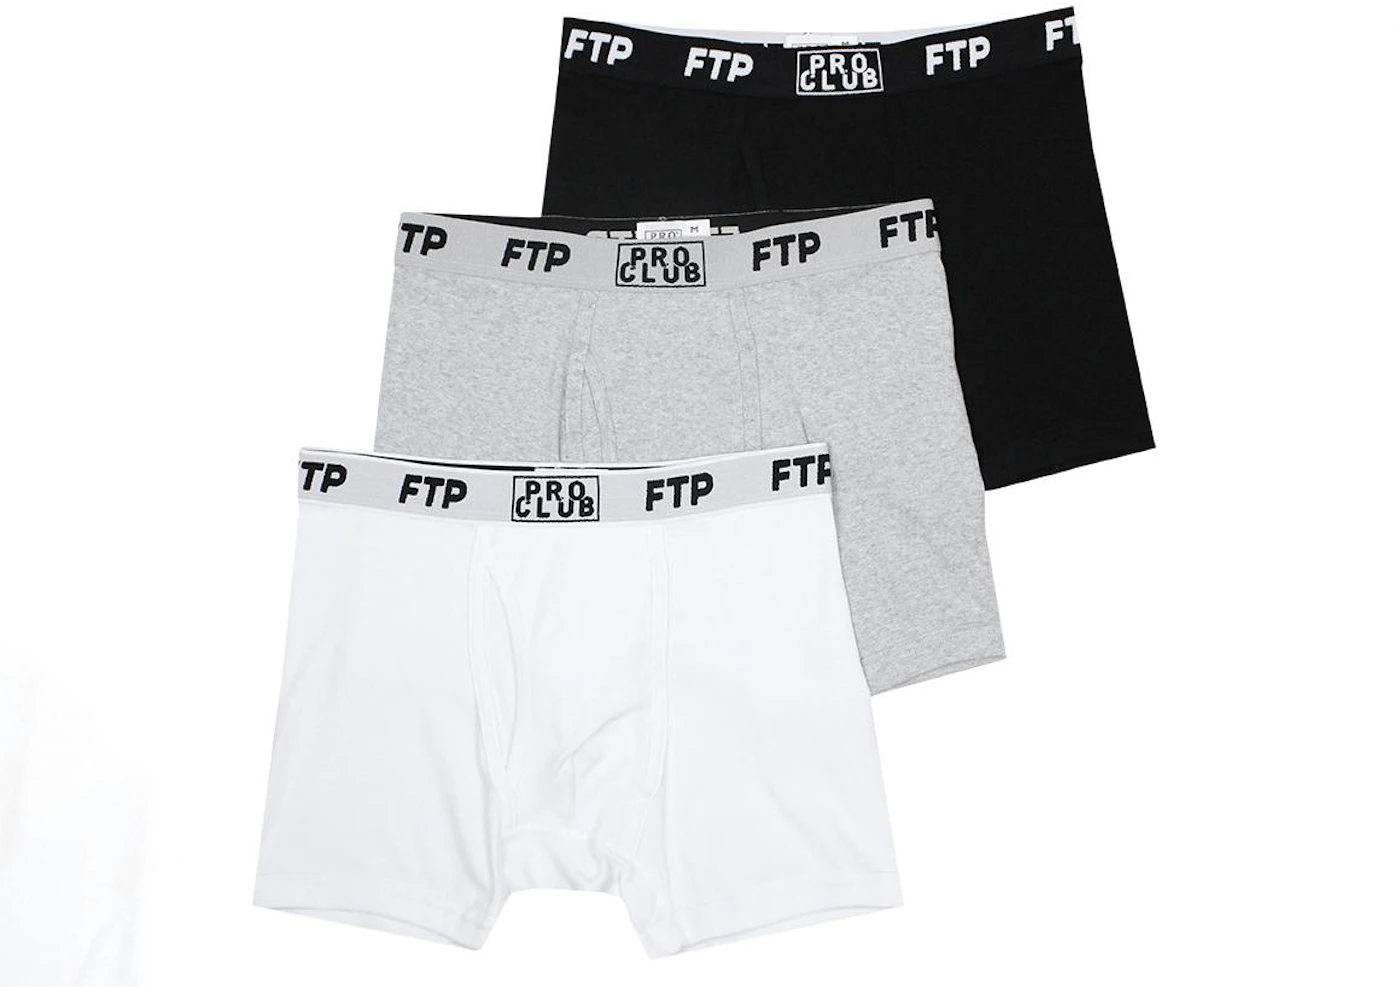 FTP x Pro Club Boxer Briefs (3 Pack) Multi - FW21 - US